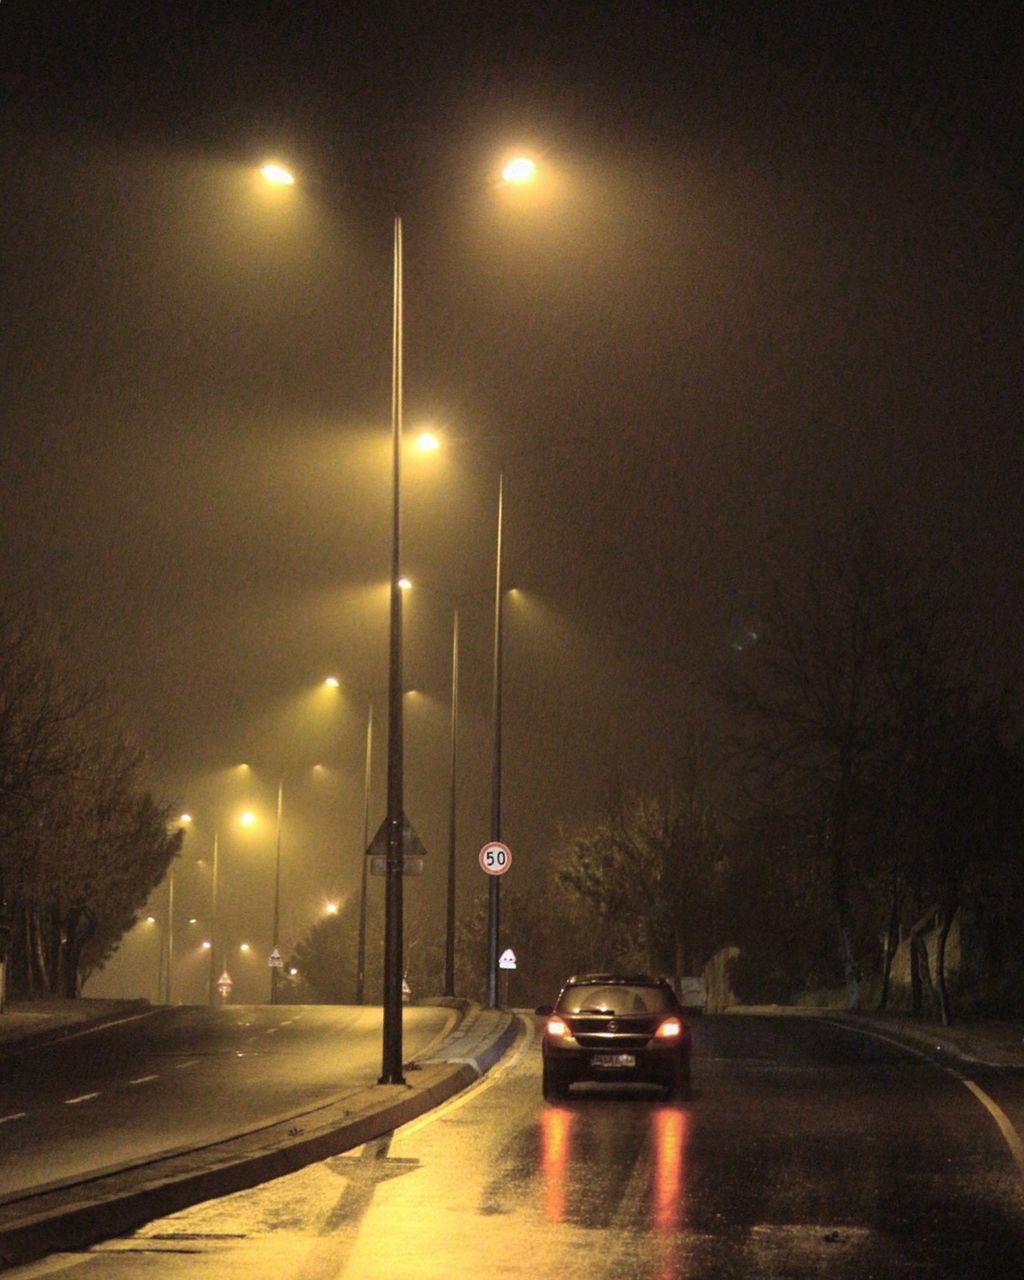 CARS ON STREET AT NIGHT DURING RAINY SEASON